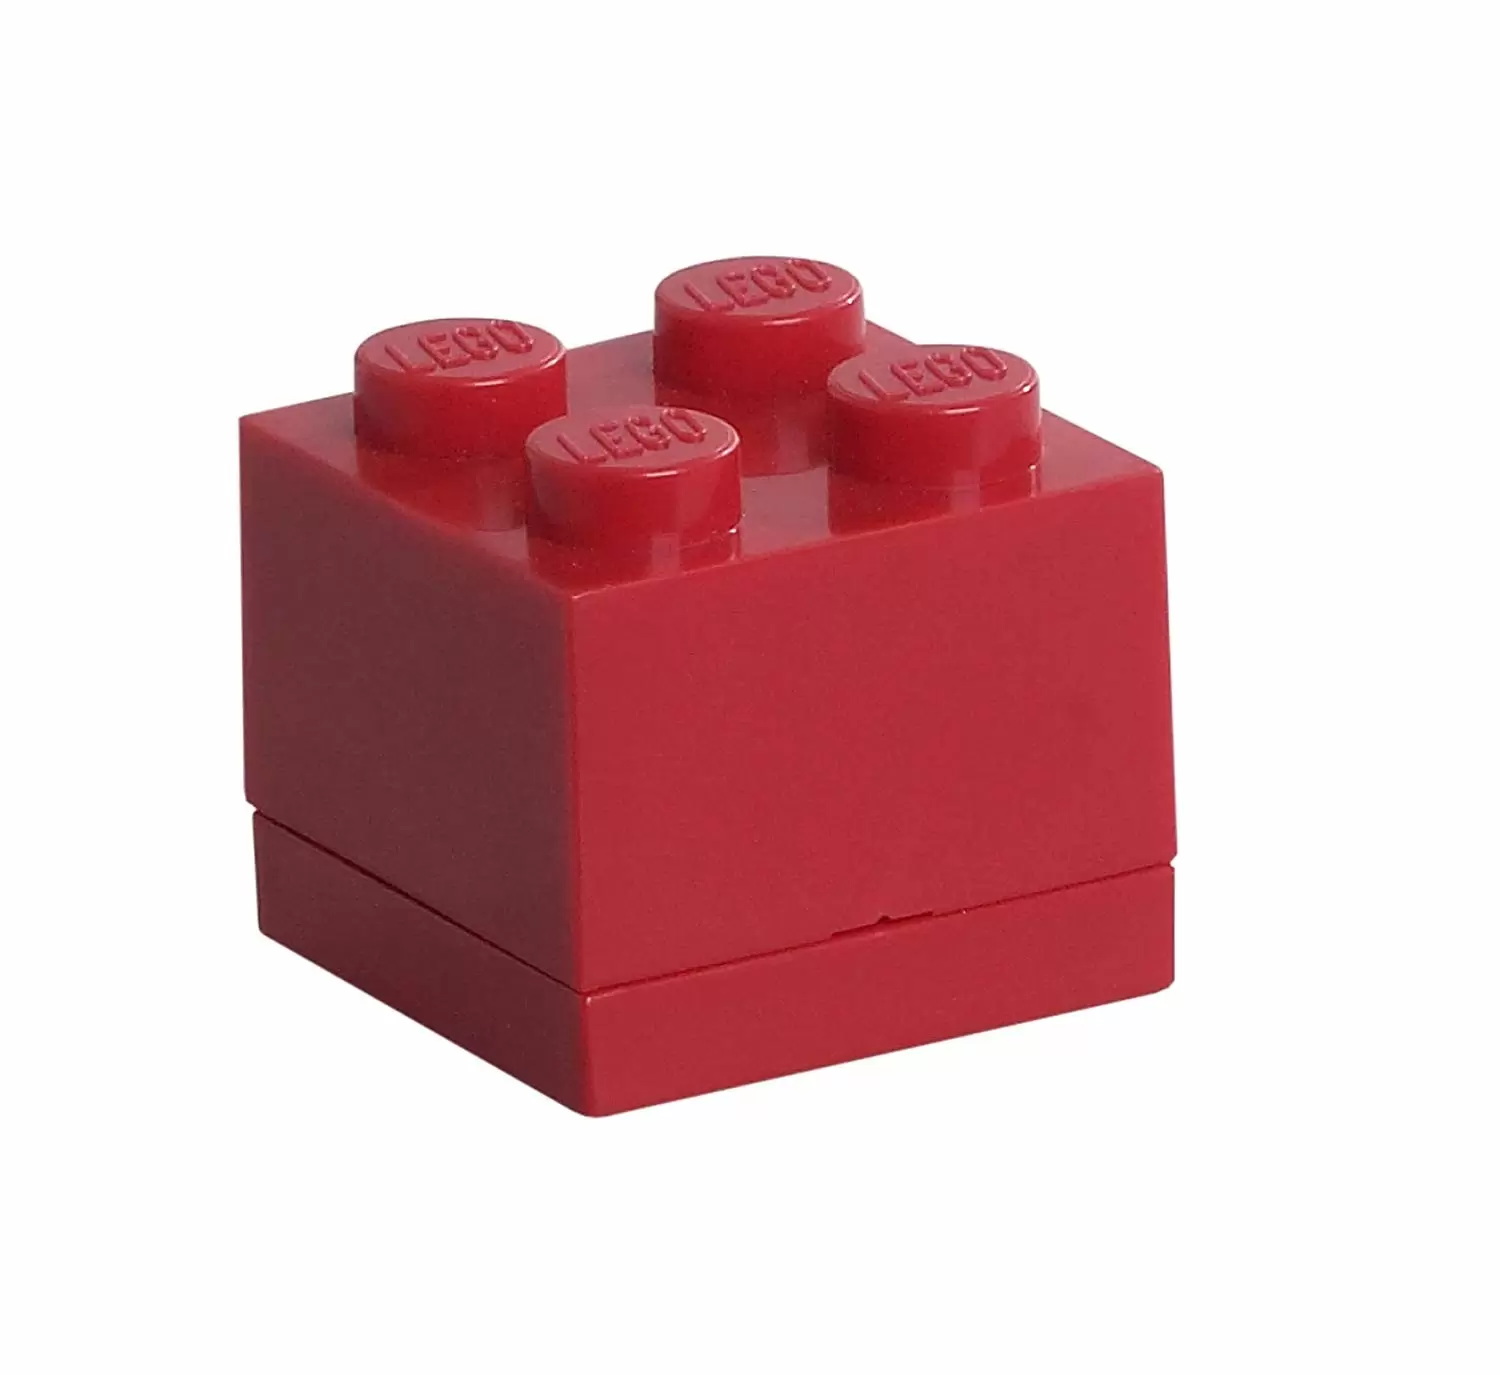 LEGO Storages - LEGO Mini Box 4 - Bright Red